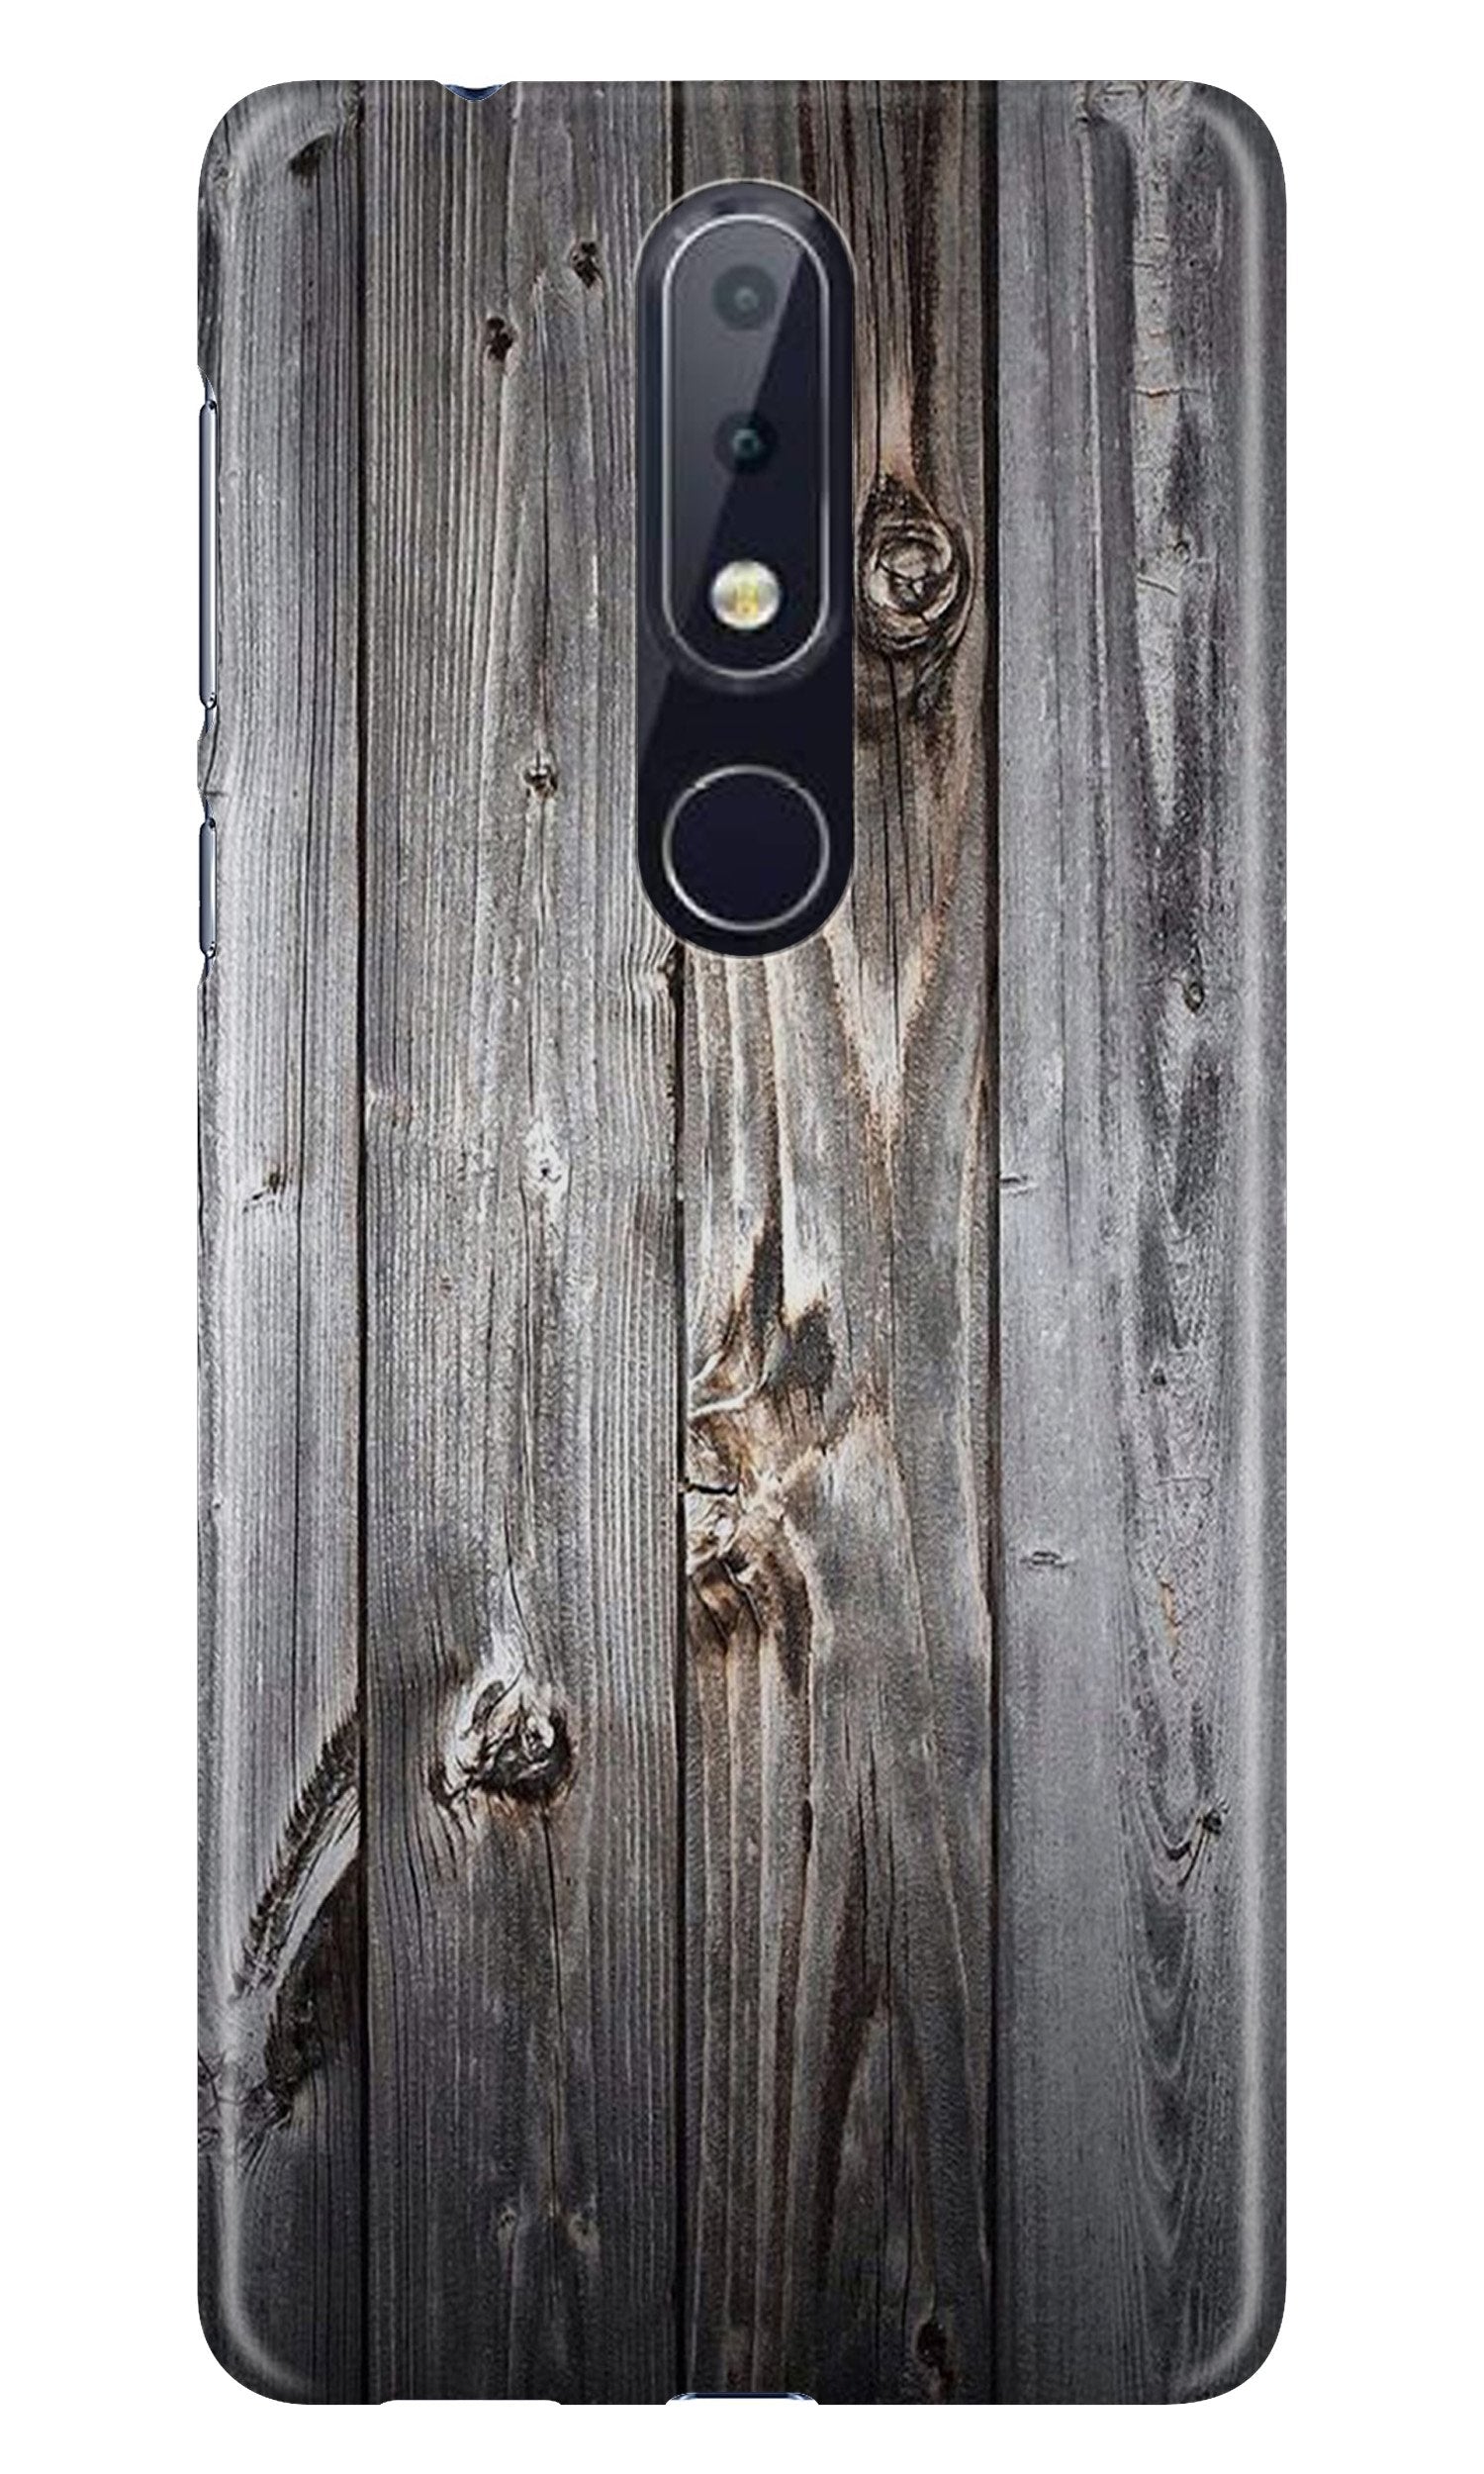 Wooden Look Case for Nokia 3.2(Design - 114)